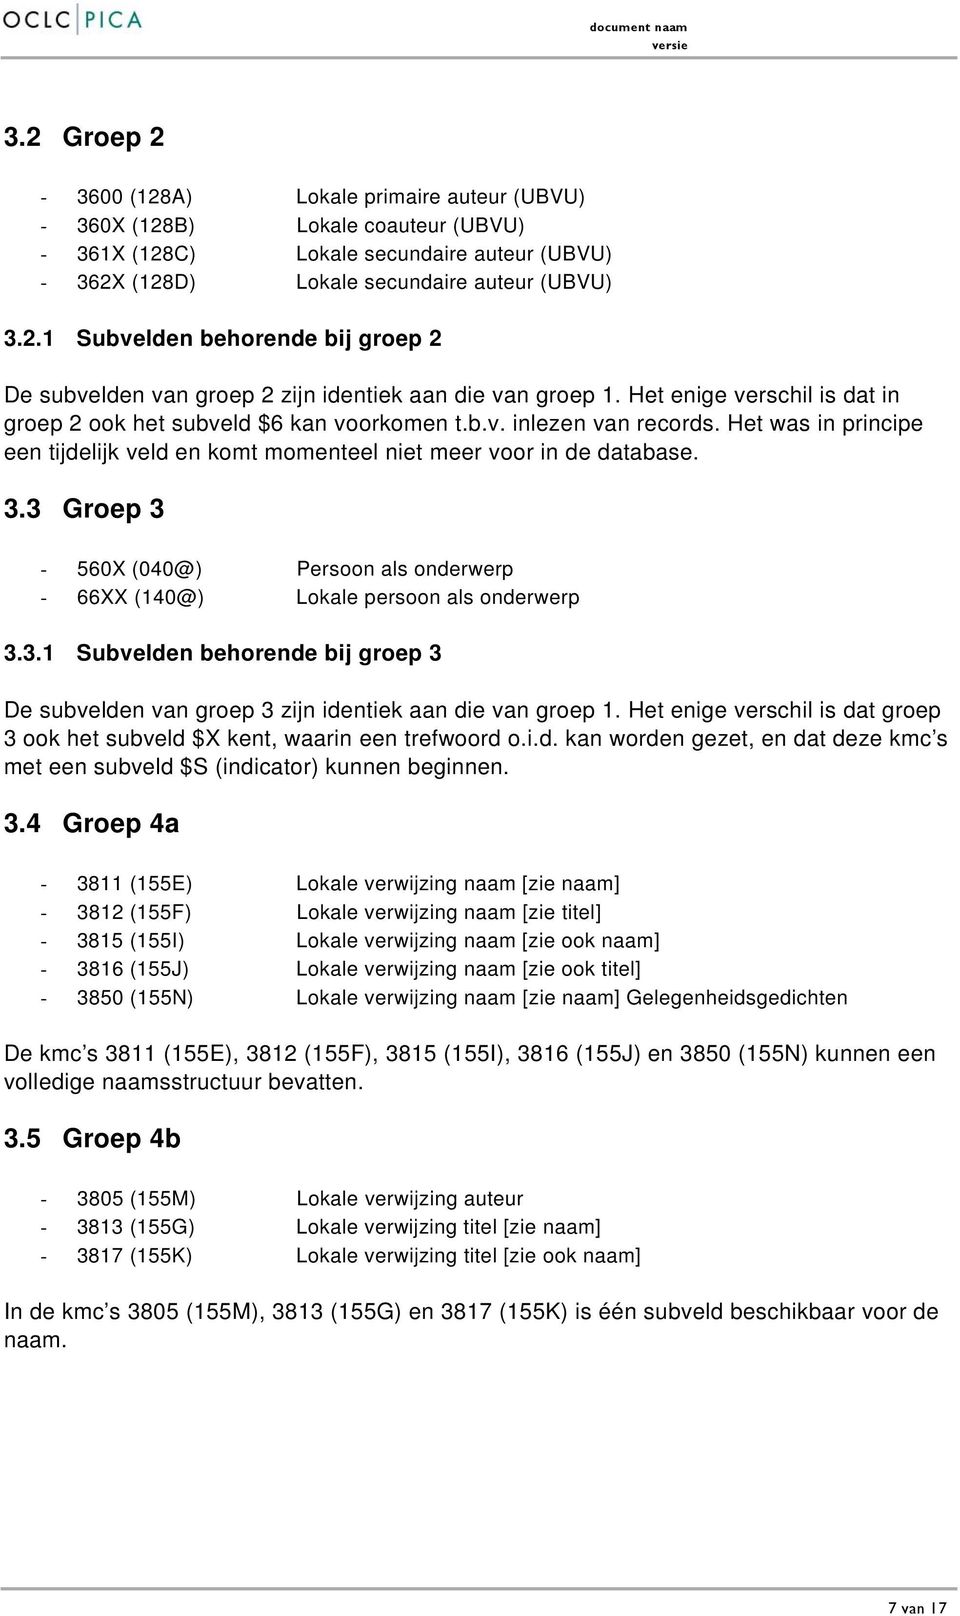 3 Groep 3-560X (040@) Persoon als onderwerp - 66XX (140@) Lokale persoon als onderwerp 3.3.1 Subvelden behorende bij groep 3 De subvelden van groep 3 zijn identiek aan die van groep 1.